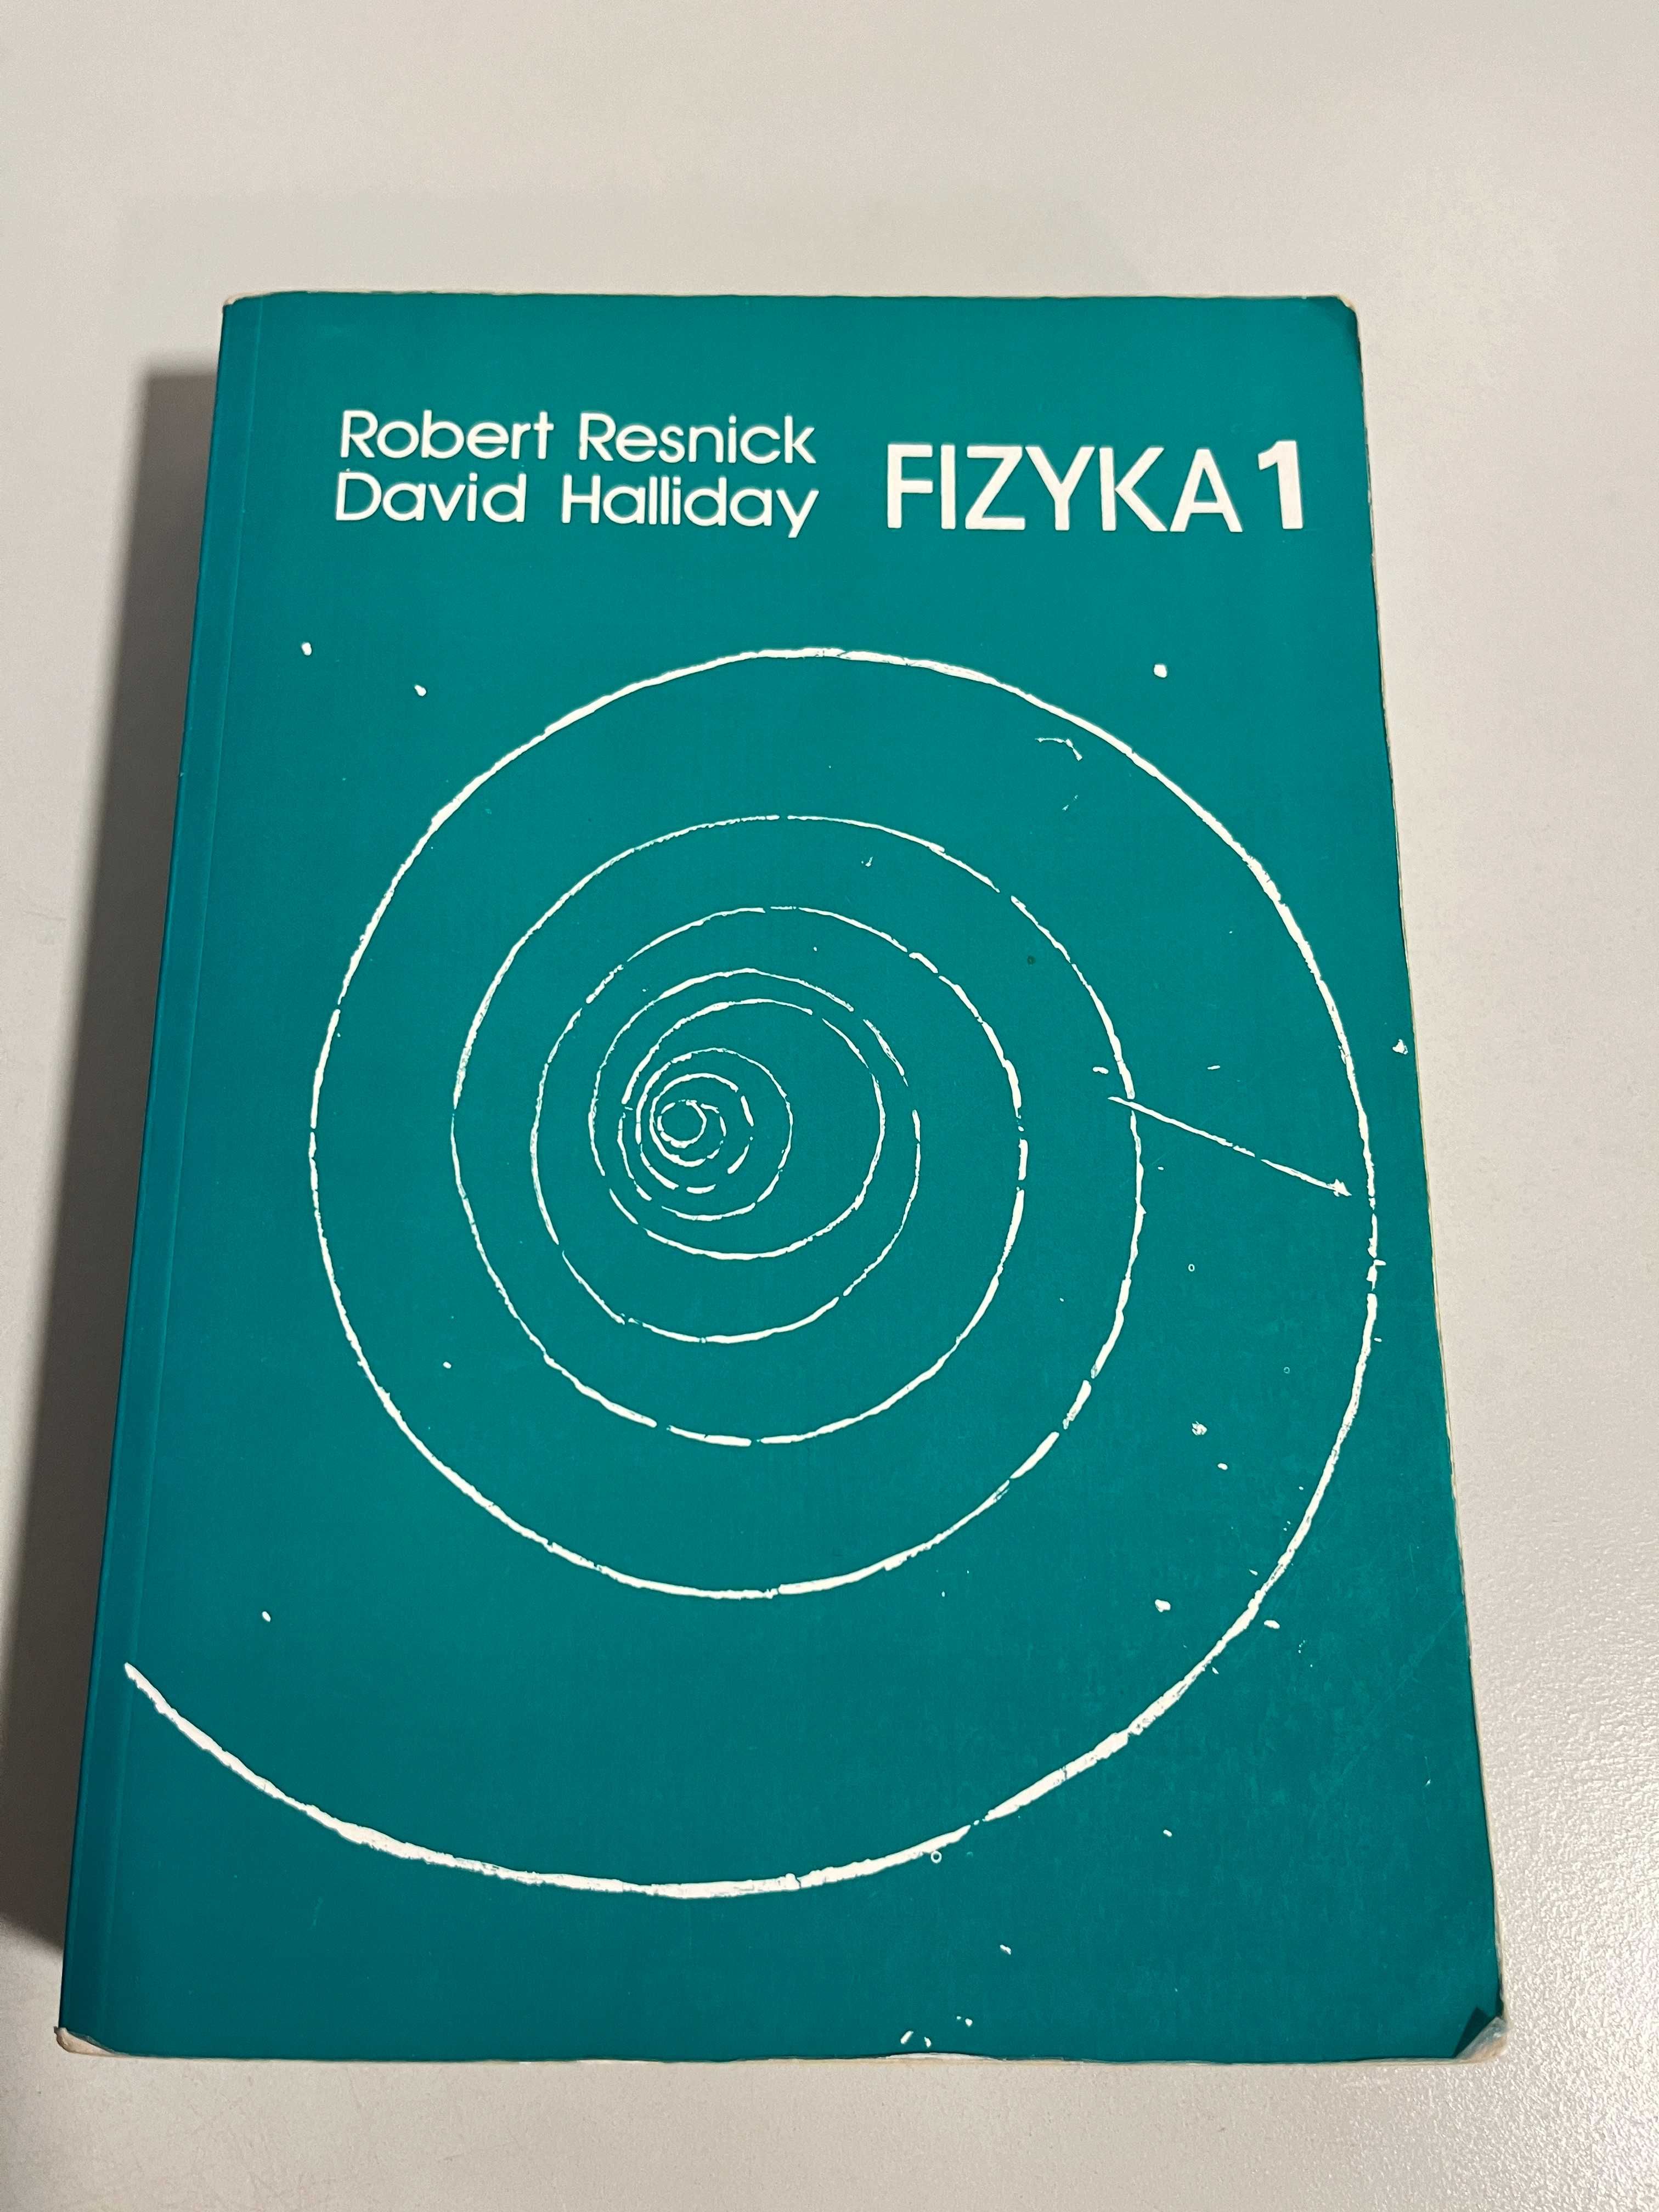 Zestaw Książek Fizyka 1 i 2 David Halliday i Robert Resnick